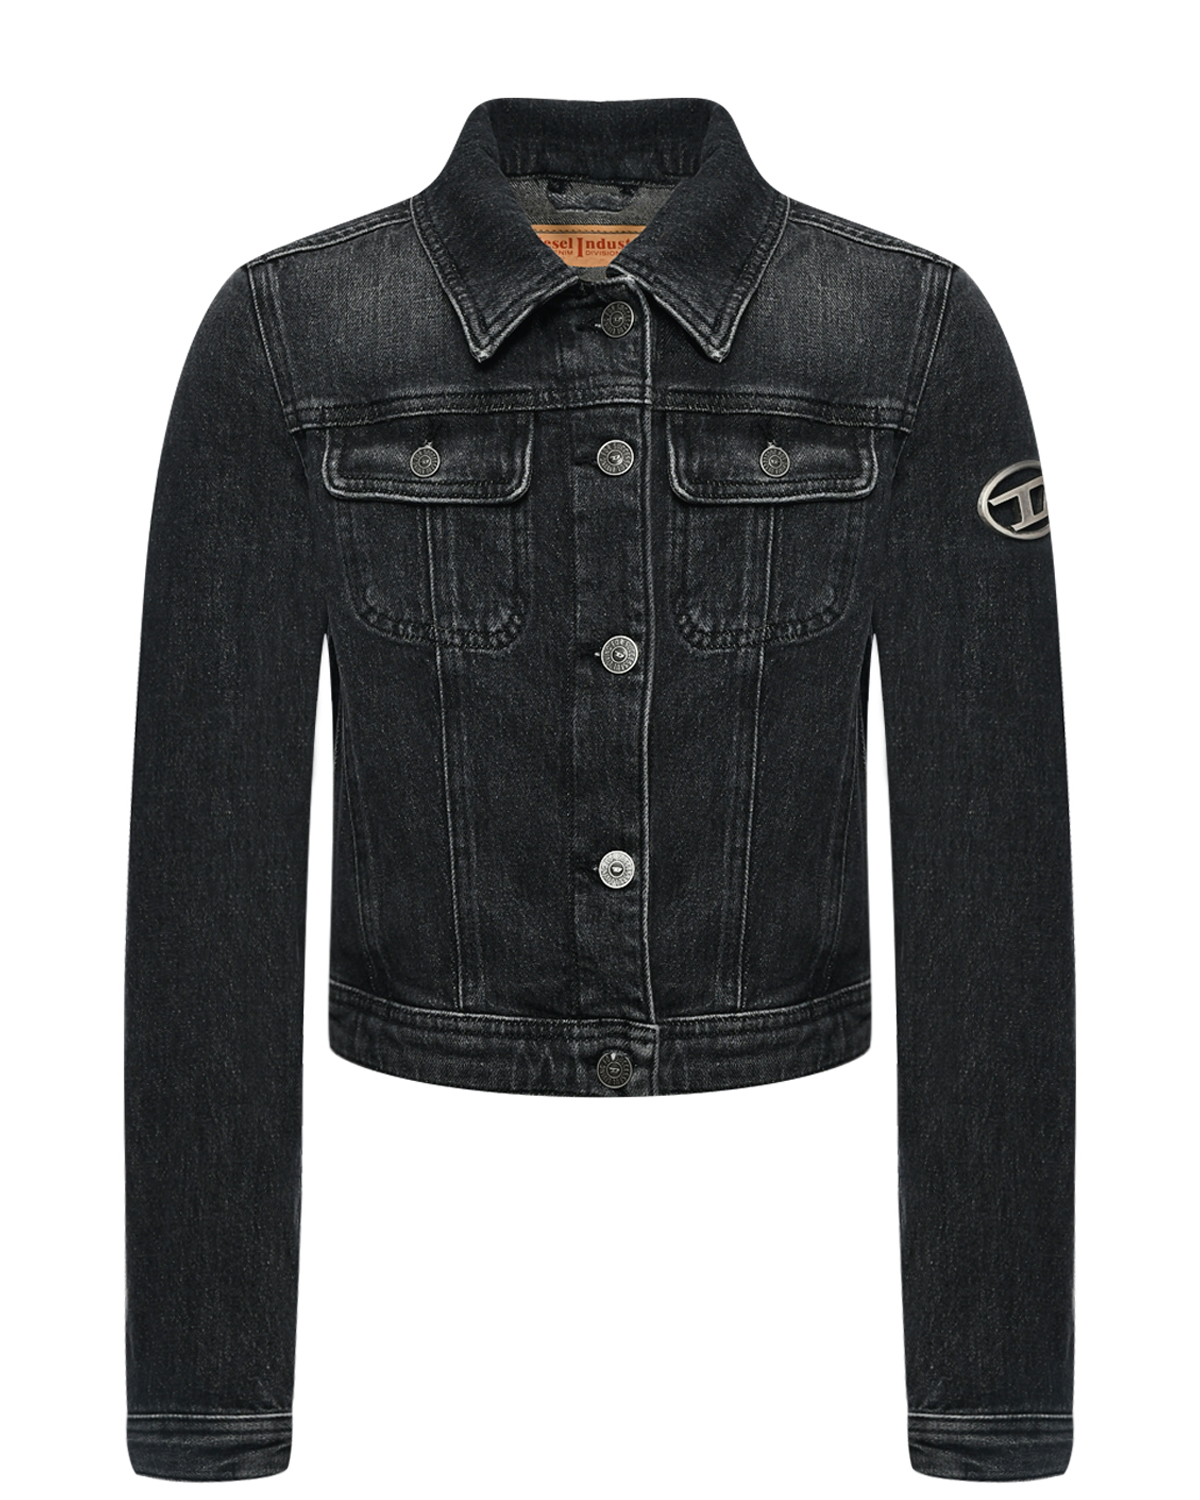 Джинсовая куртка, серая Diesel, размер 164, цвет нет цвета - фото 1